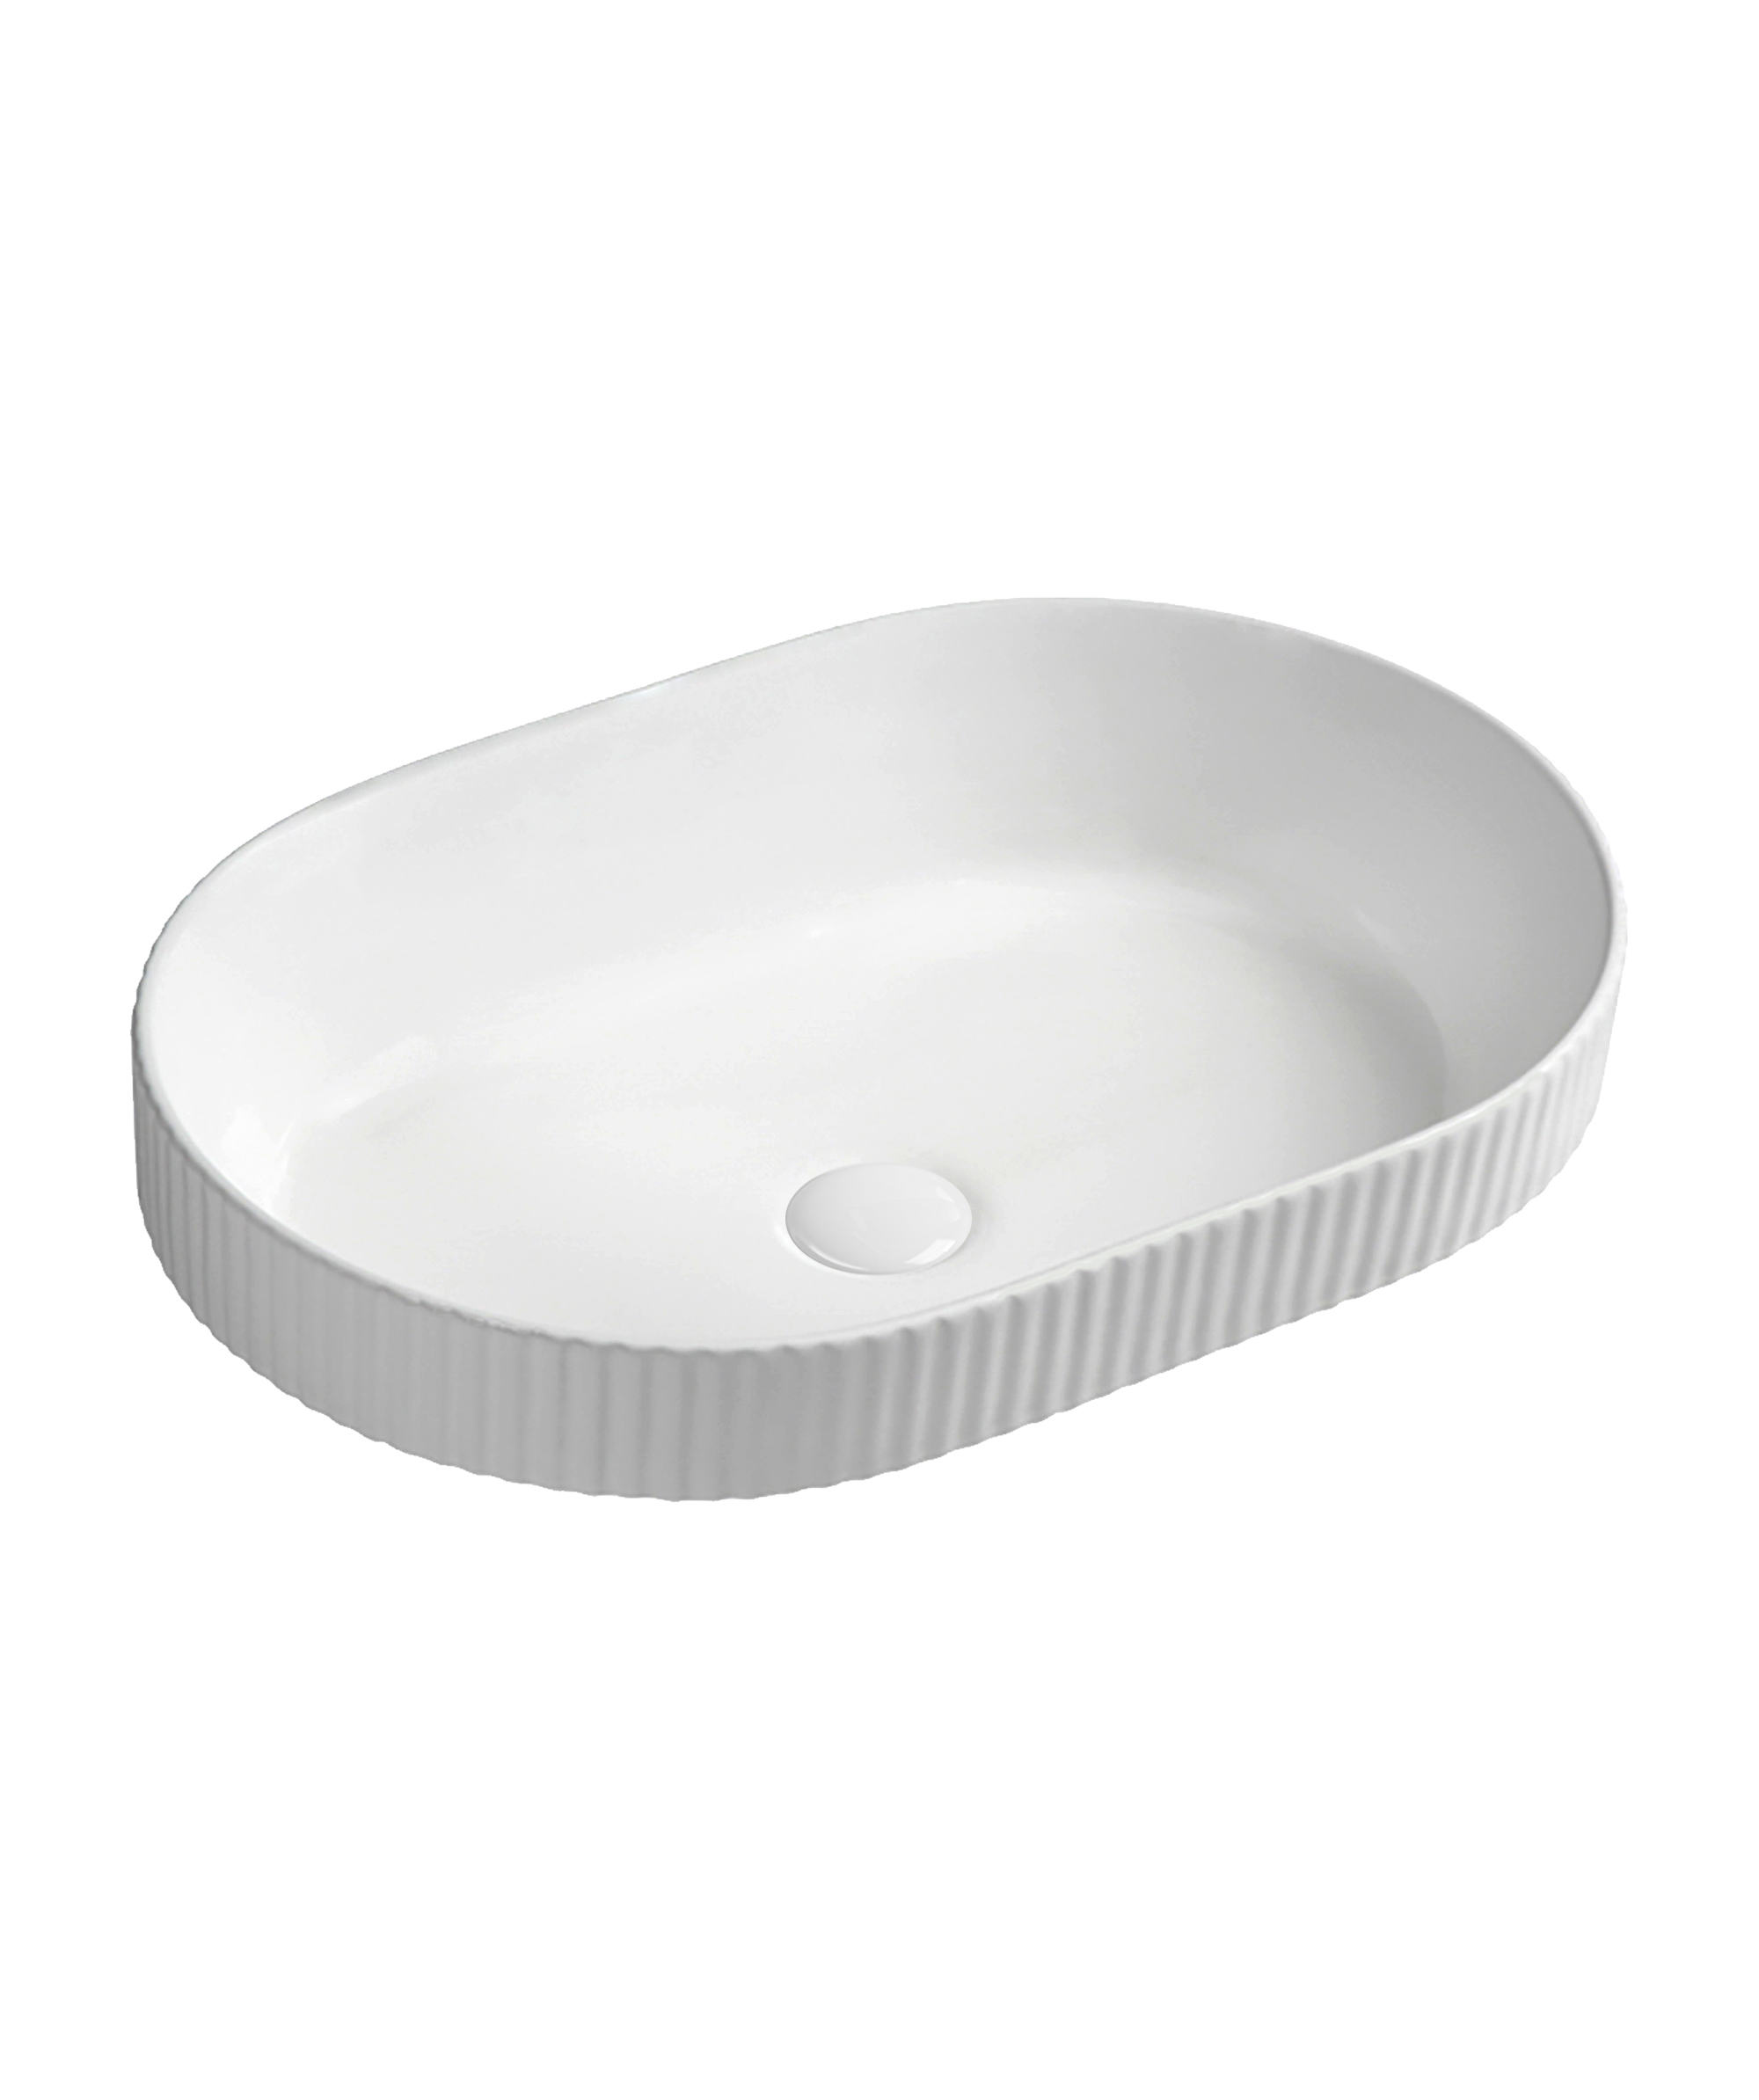 Cleo 550 ceramic basin - White Silk Matte